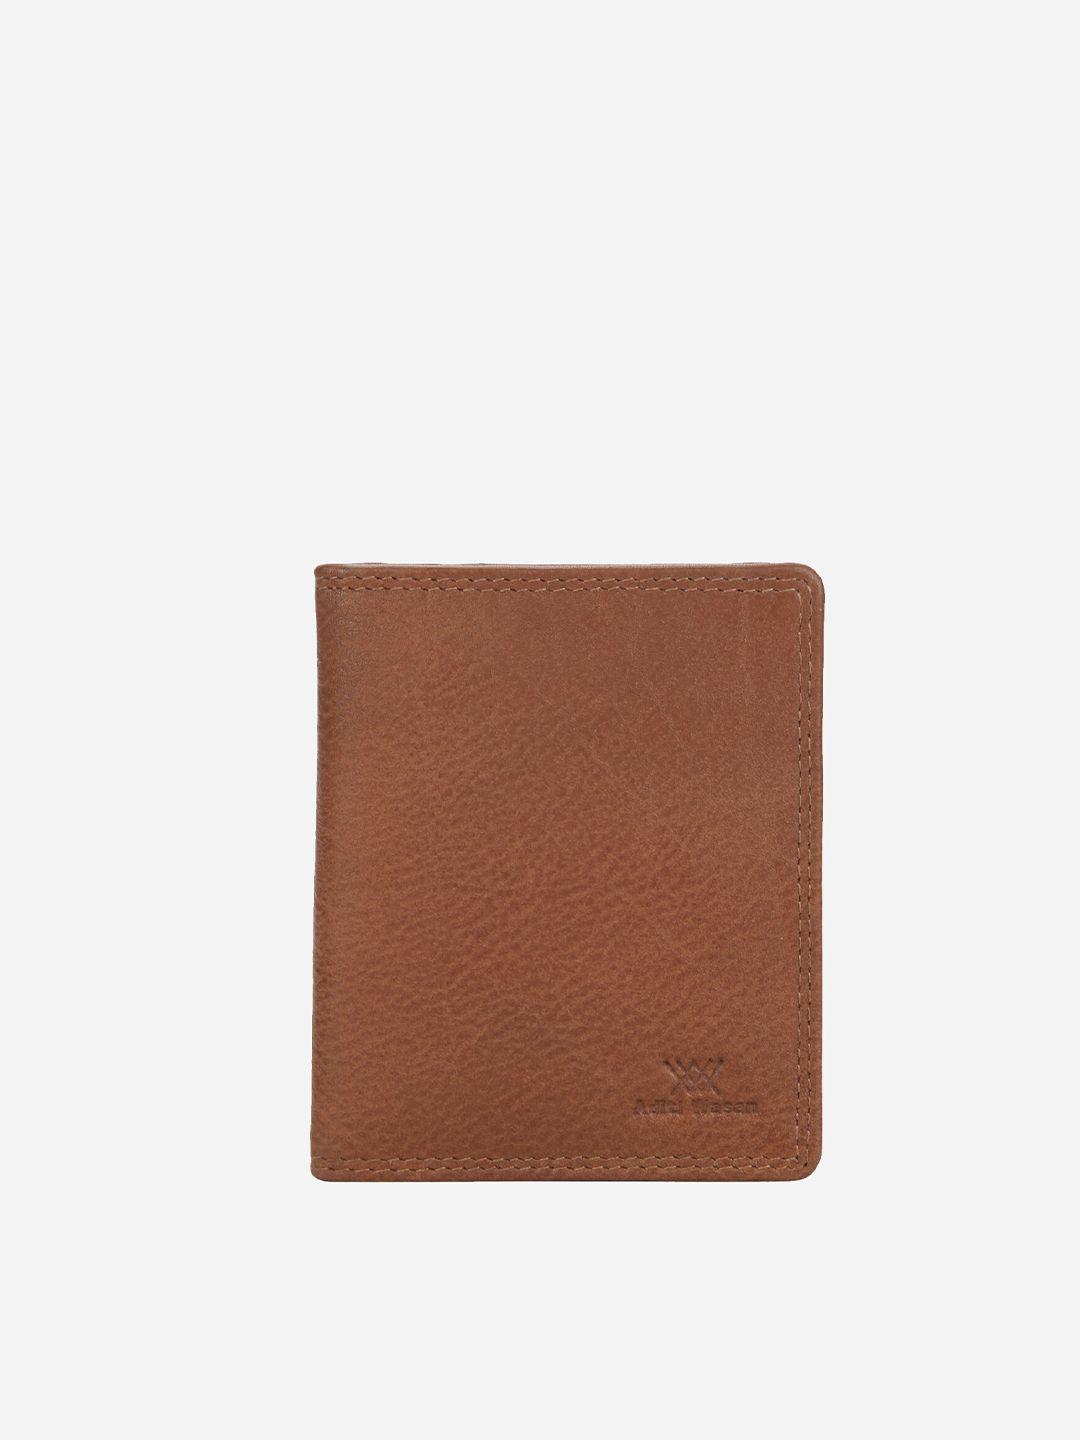 aditi wasan unisex tan leather card holder